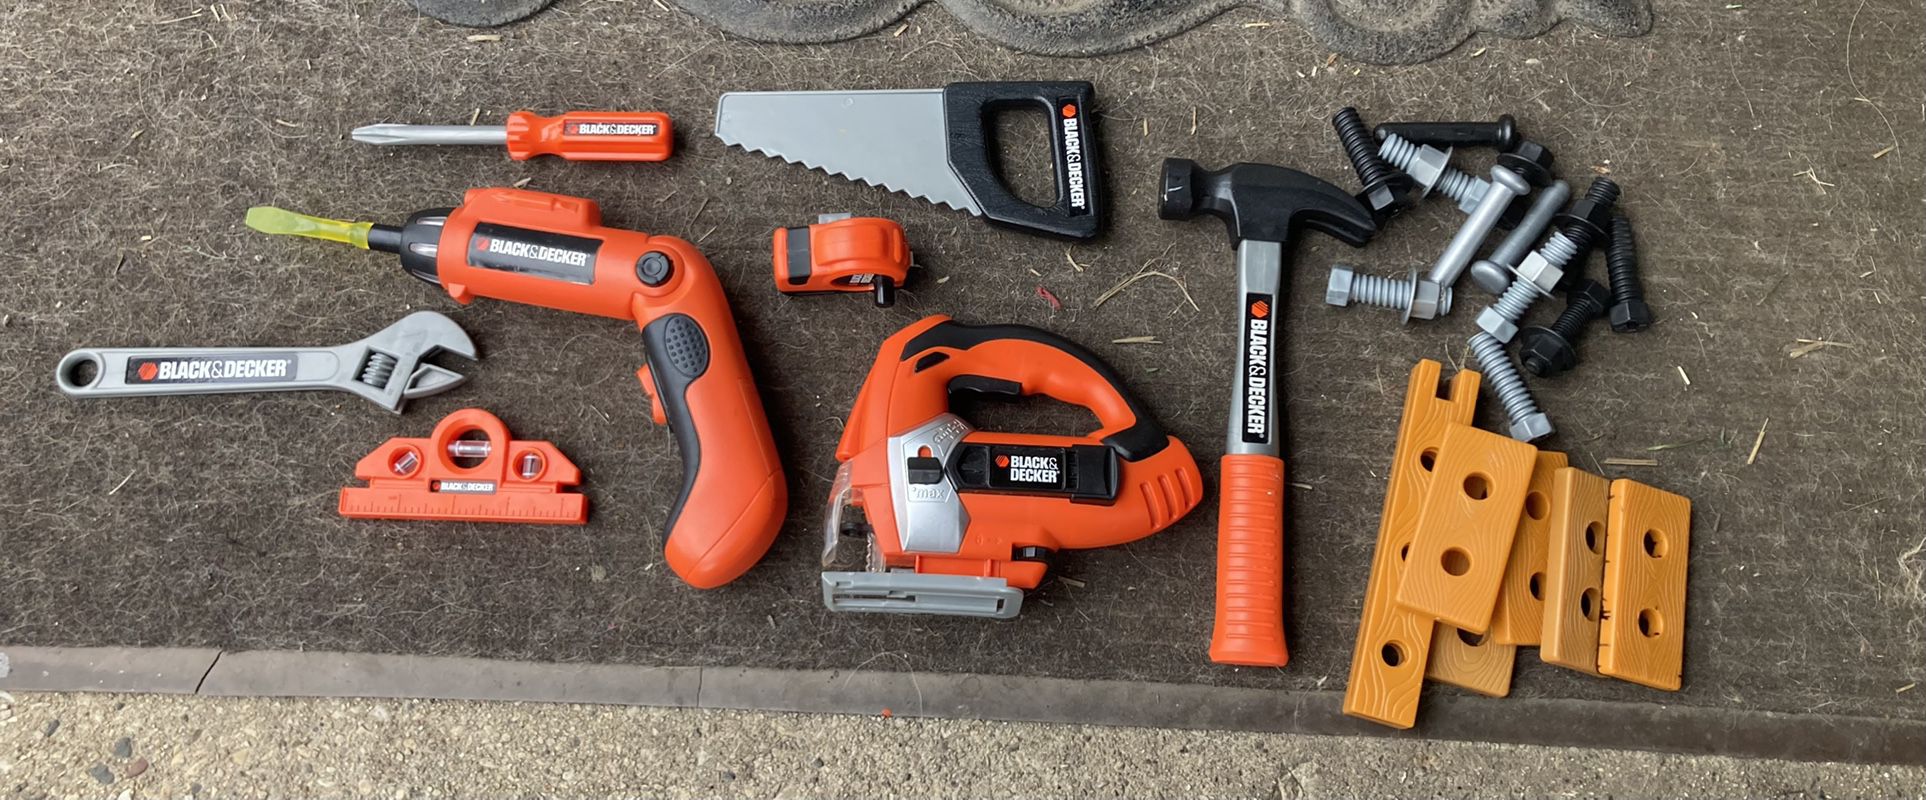 Black & Decker kids power tools workbench missing some tools - baby & kid  stuff - by owner - household sale - craigslist